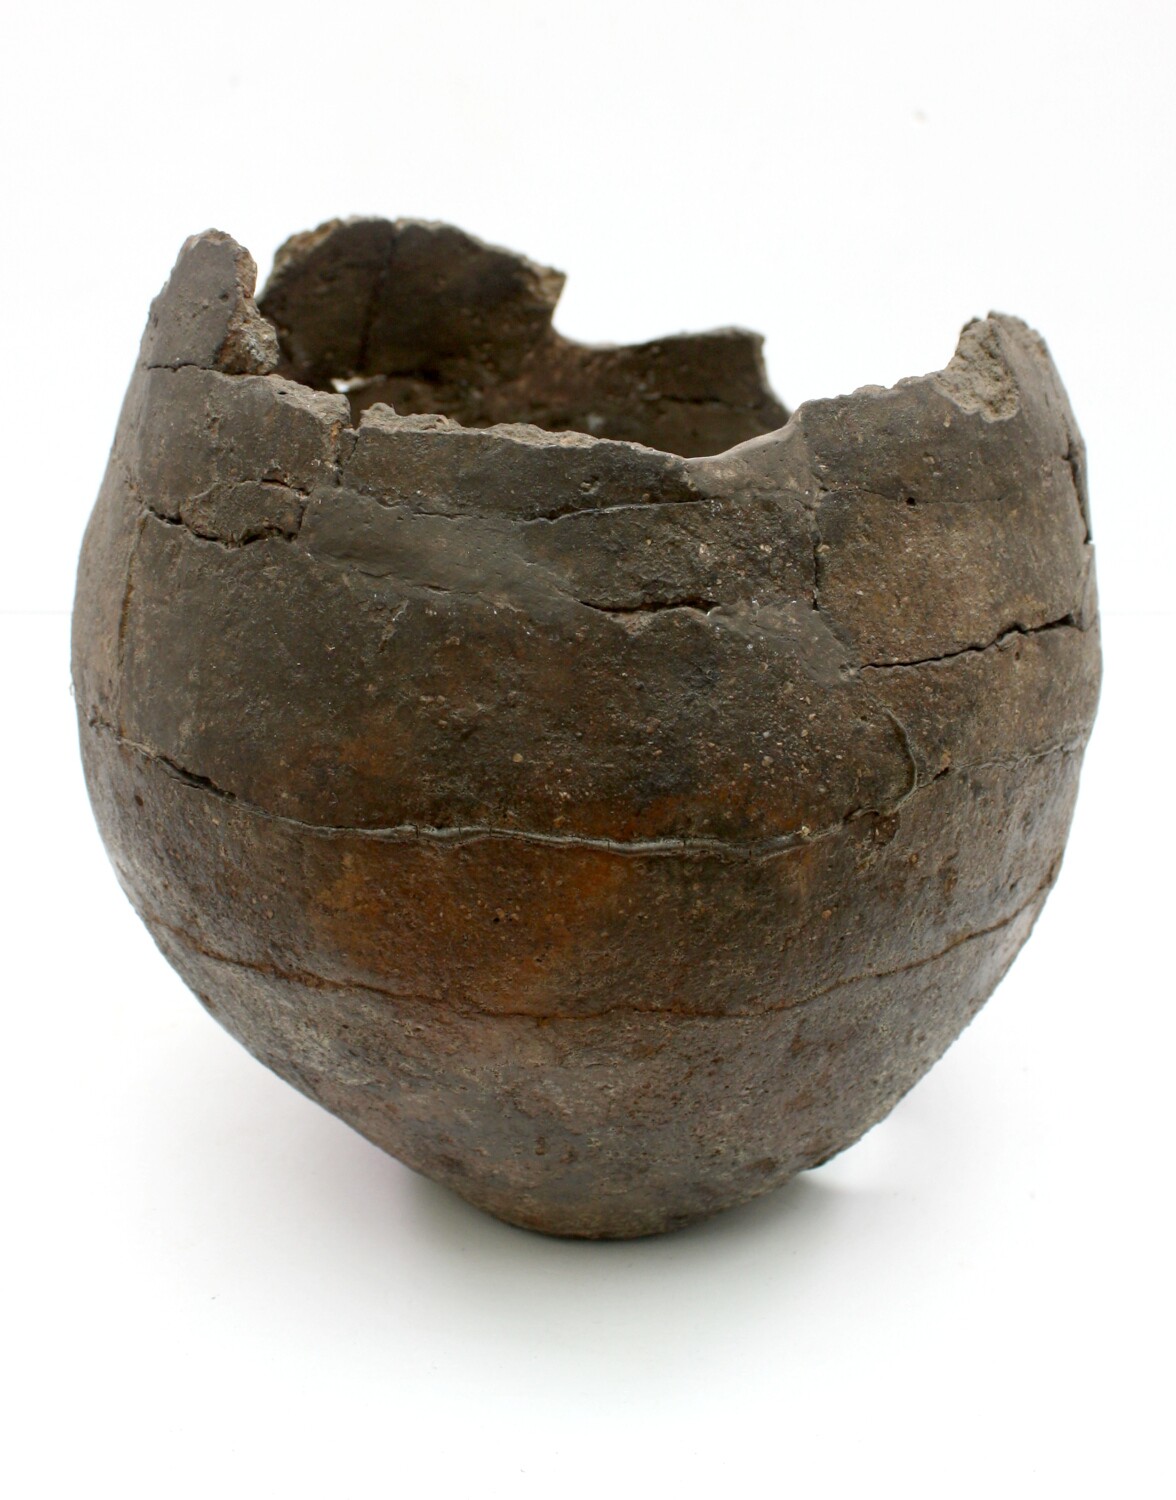 Bauchiger Topf (Urne) (Drilandmuseum CC BY-NC-SA)